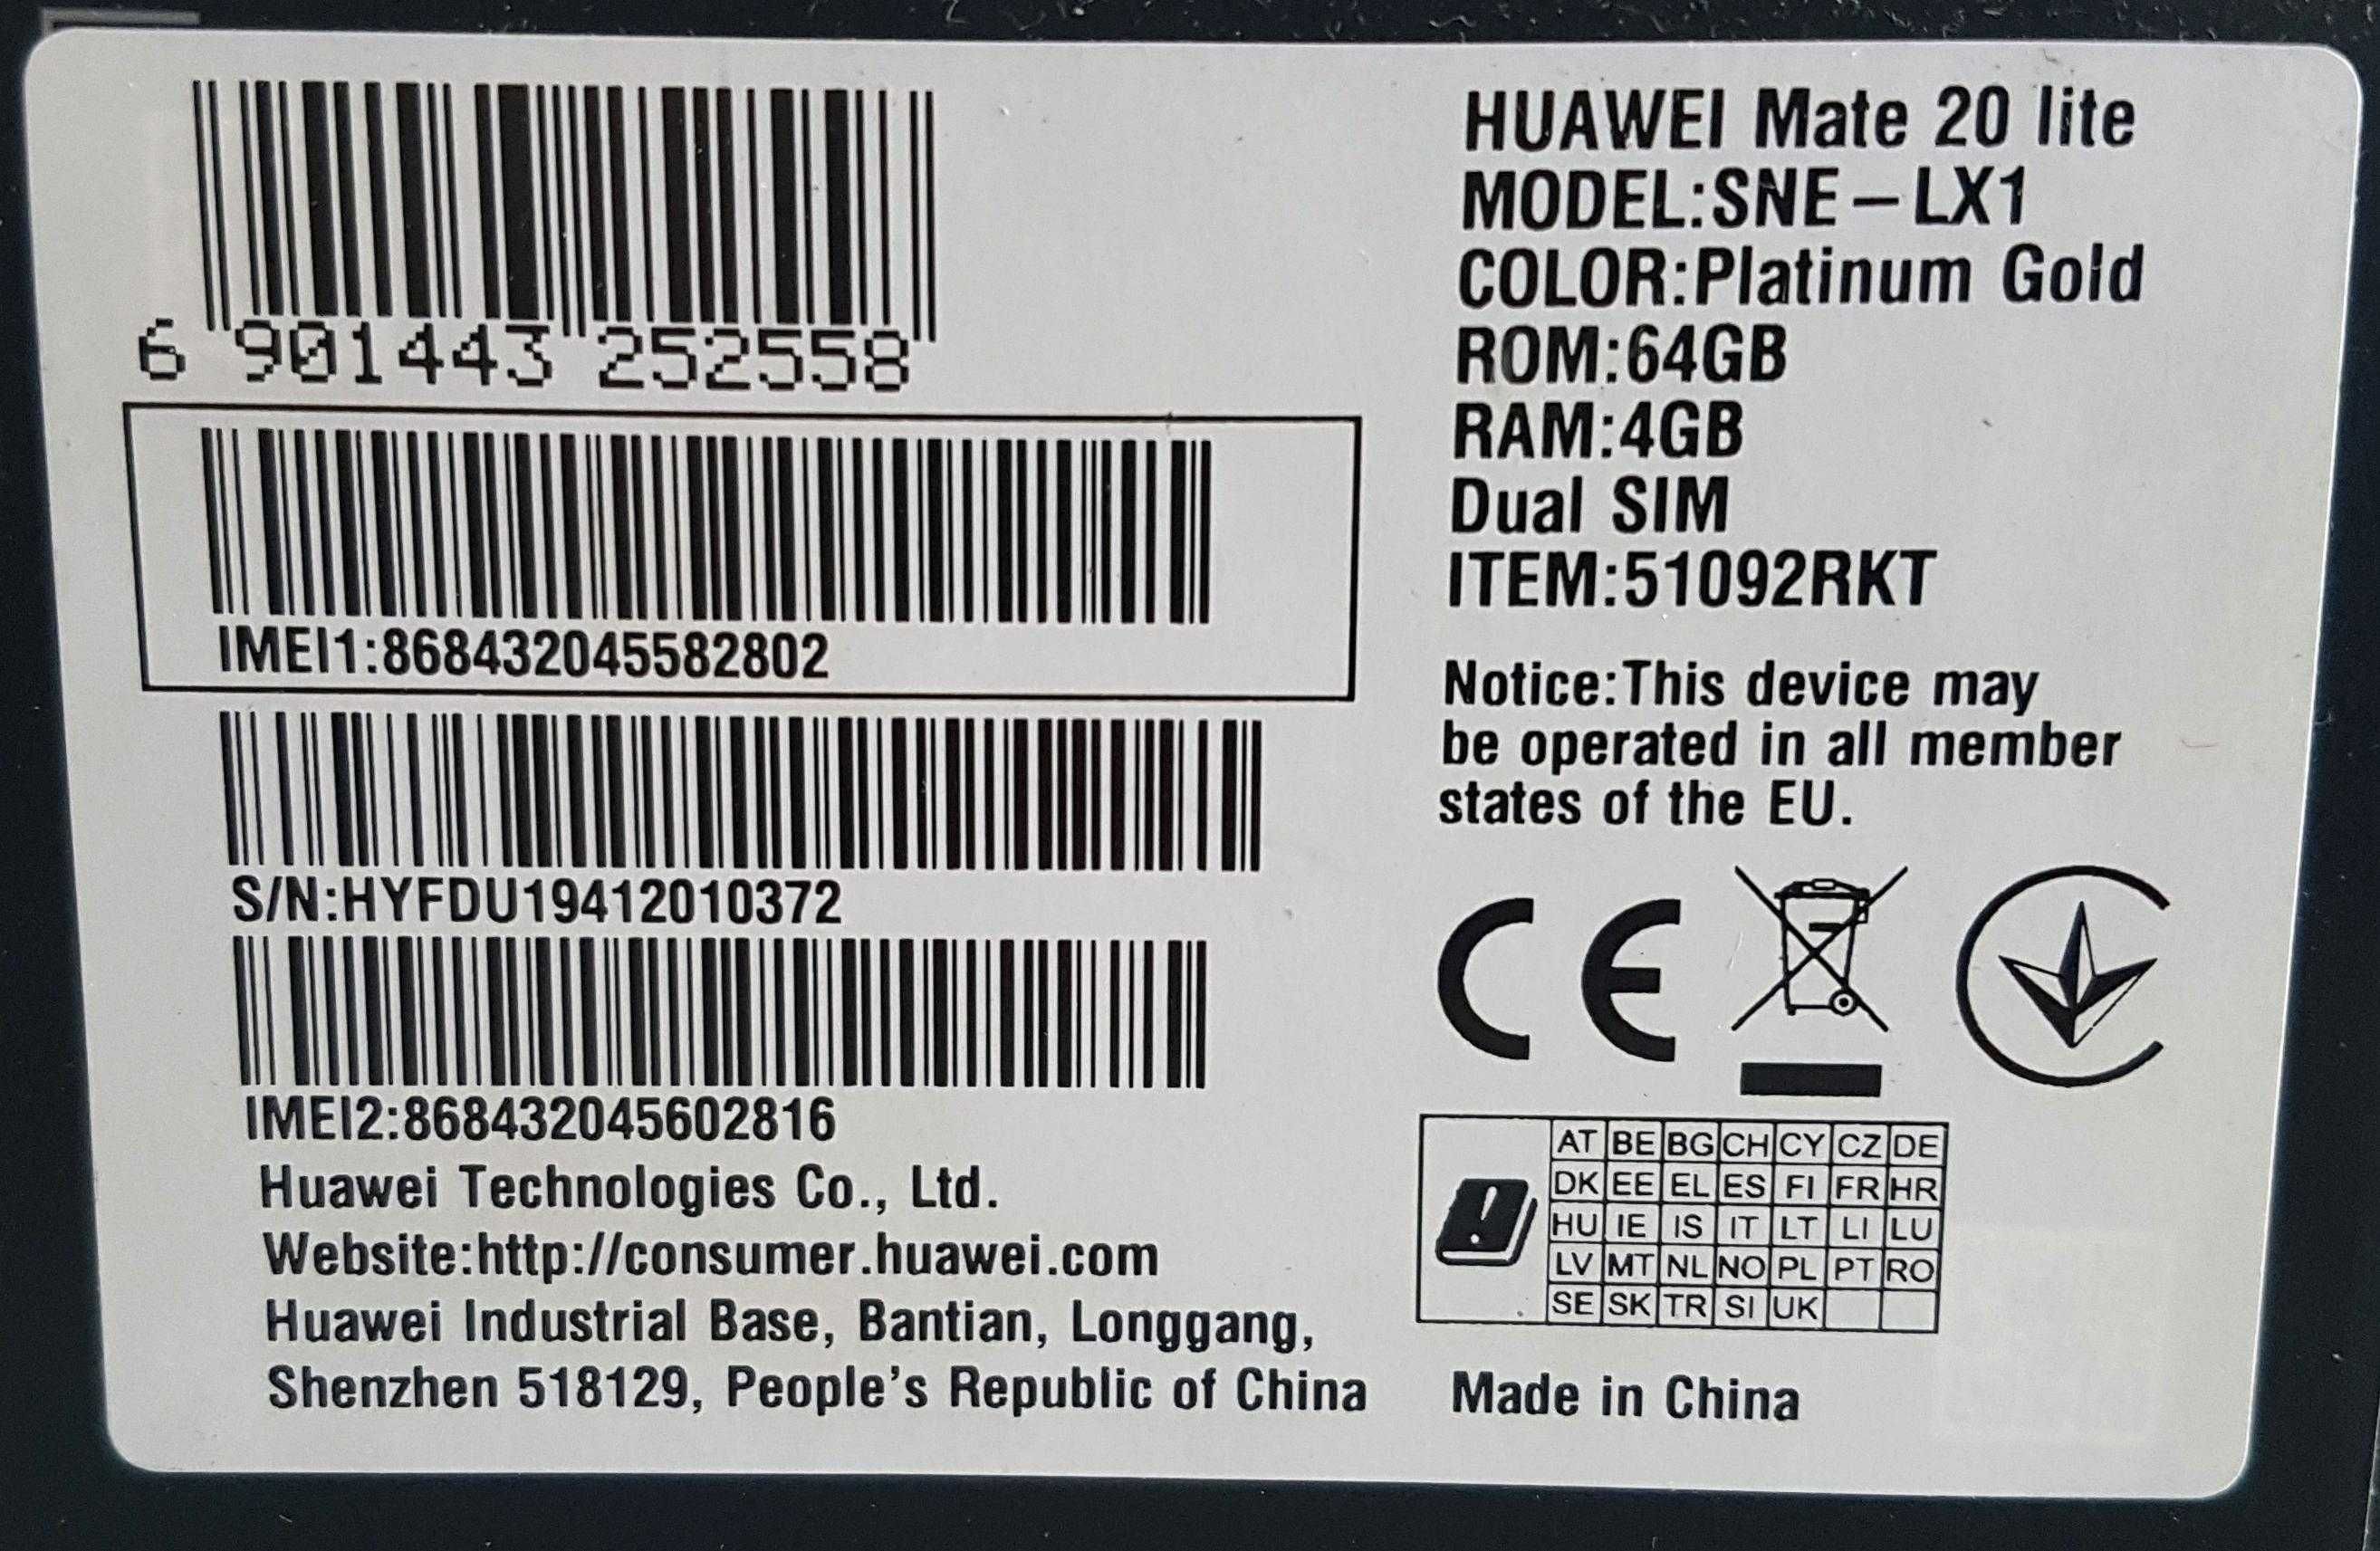 Huawei Mate 20 lite pudełko opakowanie etui telefon Mate20